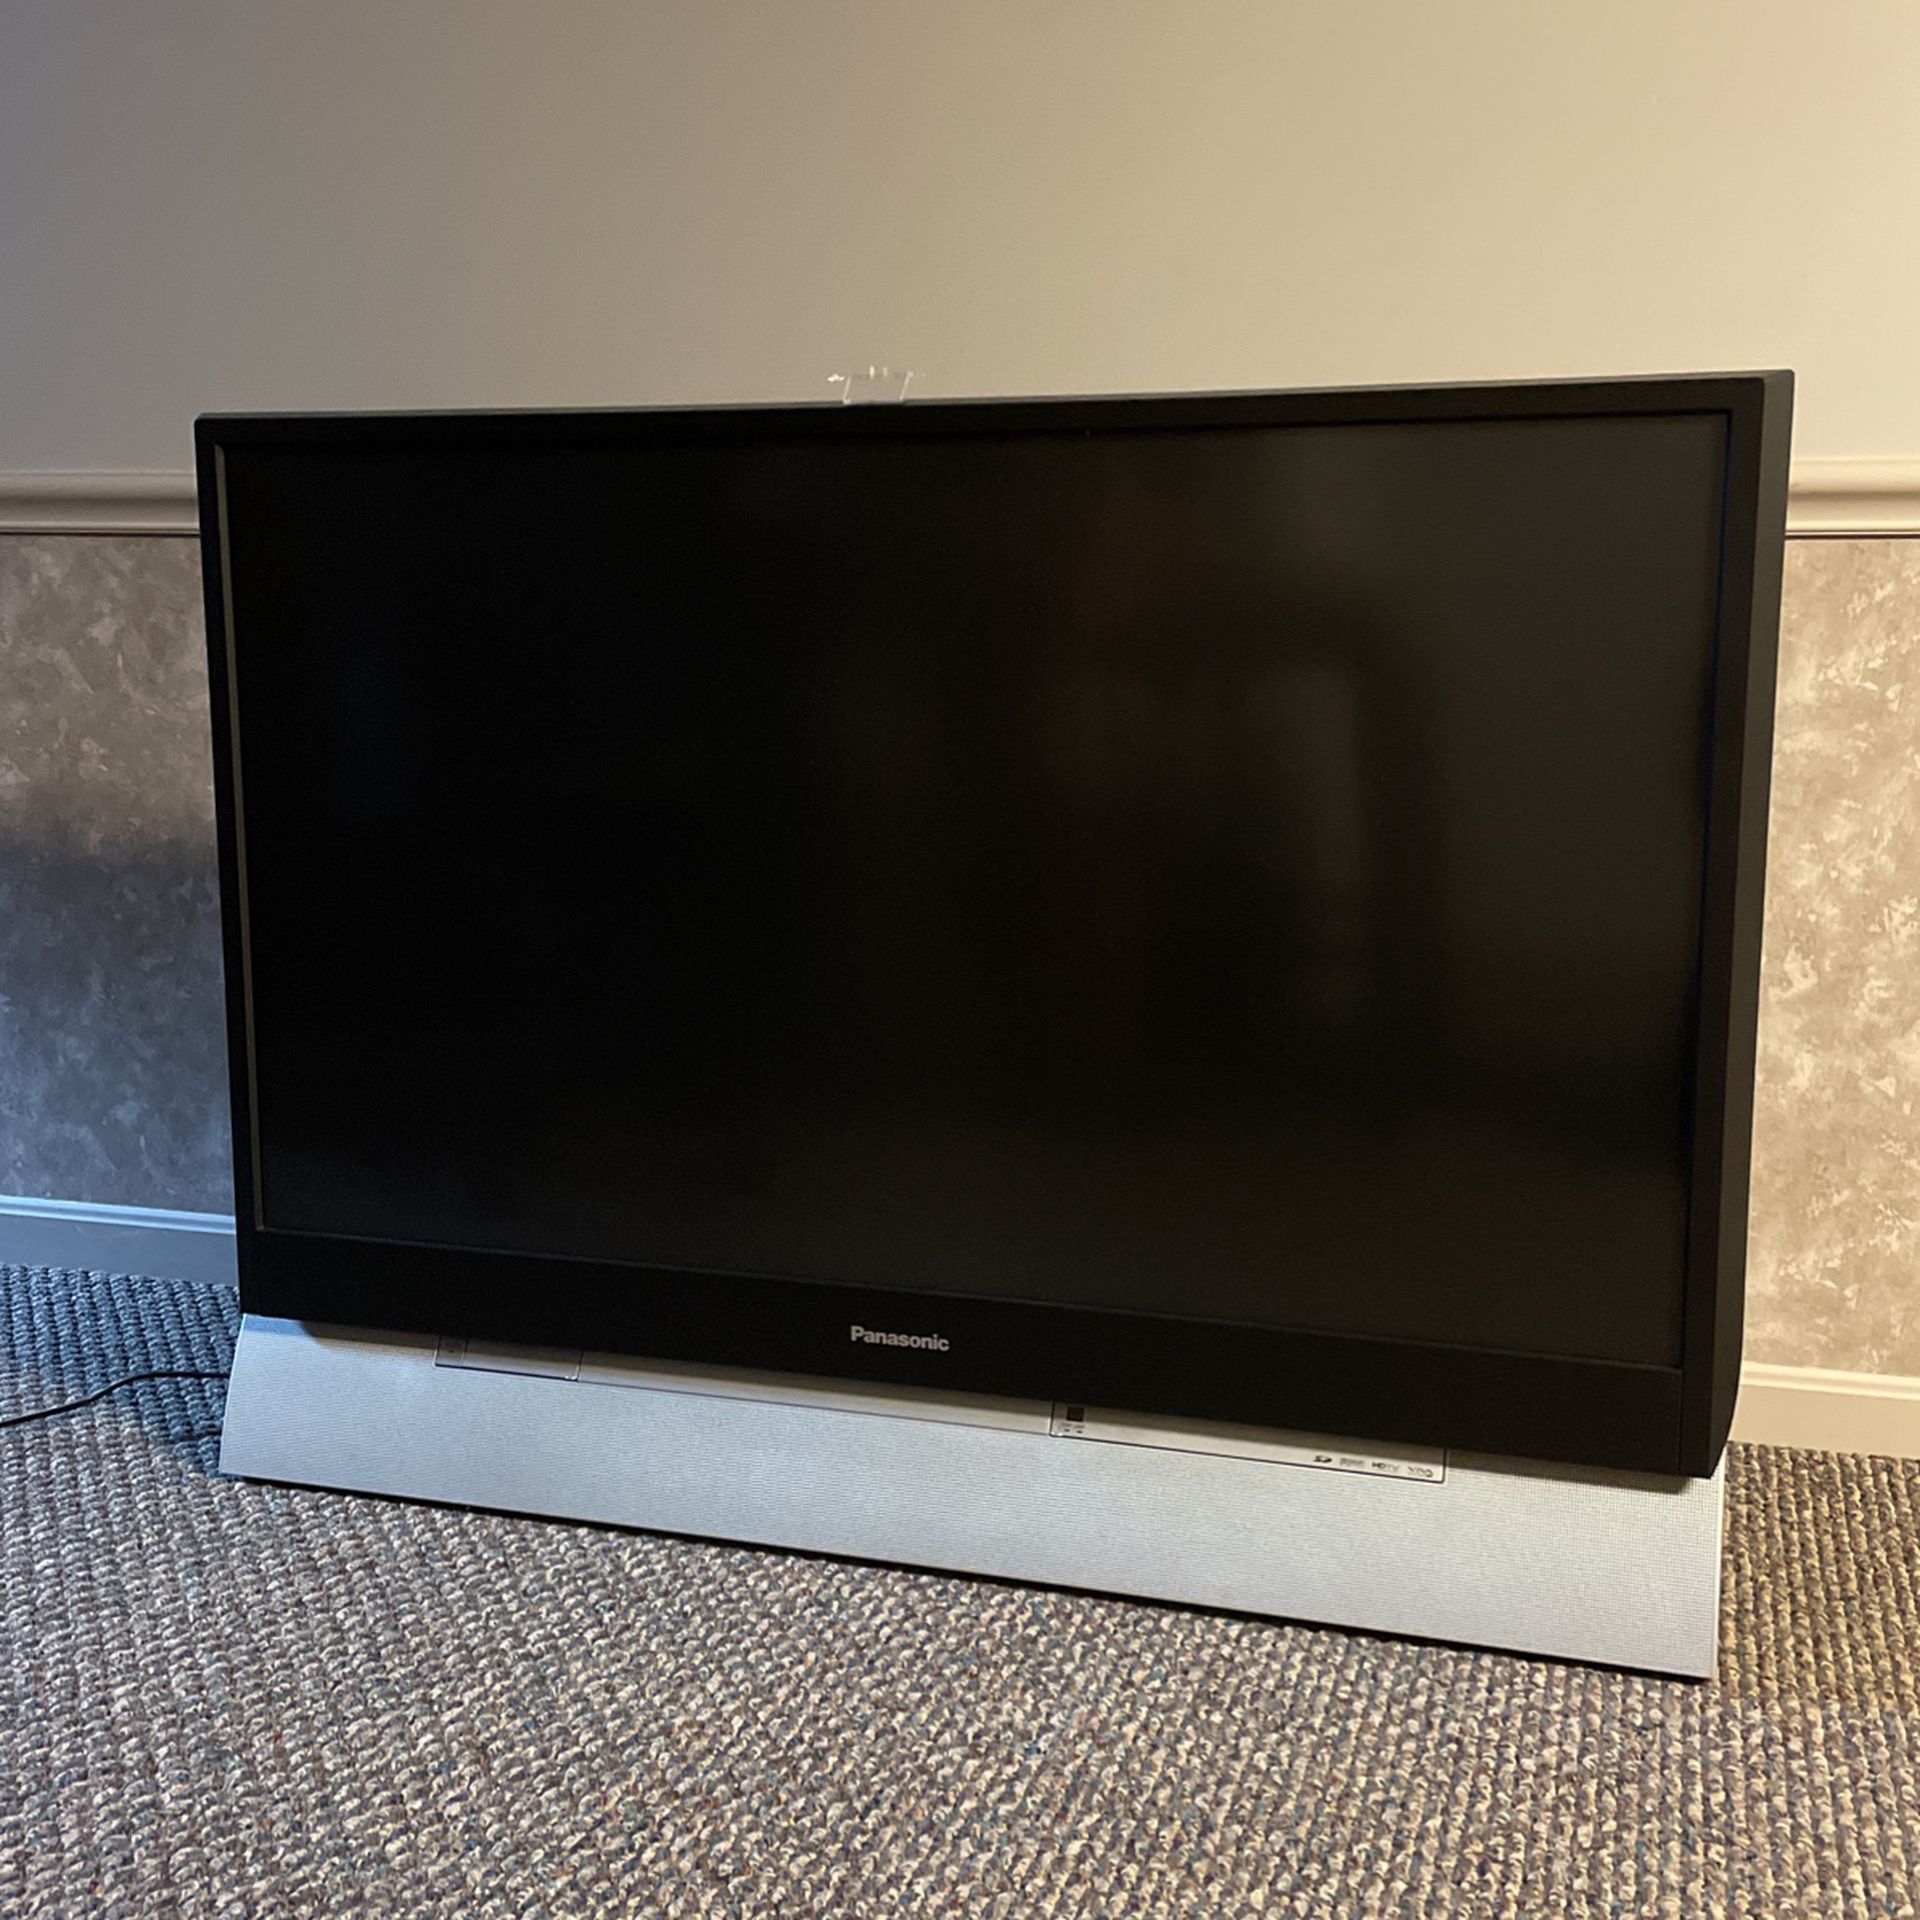 Panasonic Large Screen TV